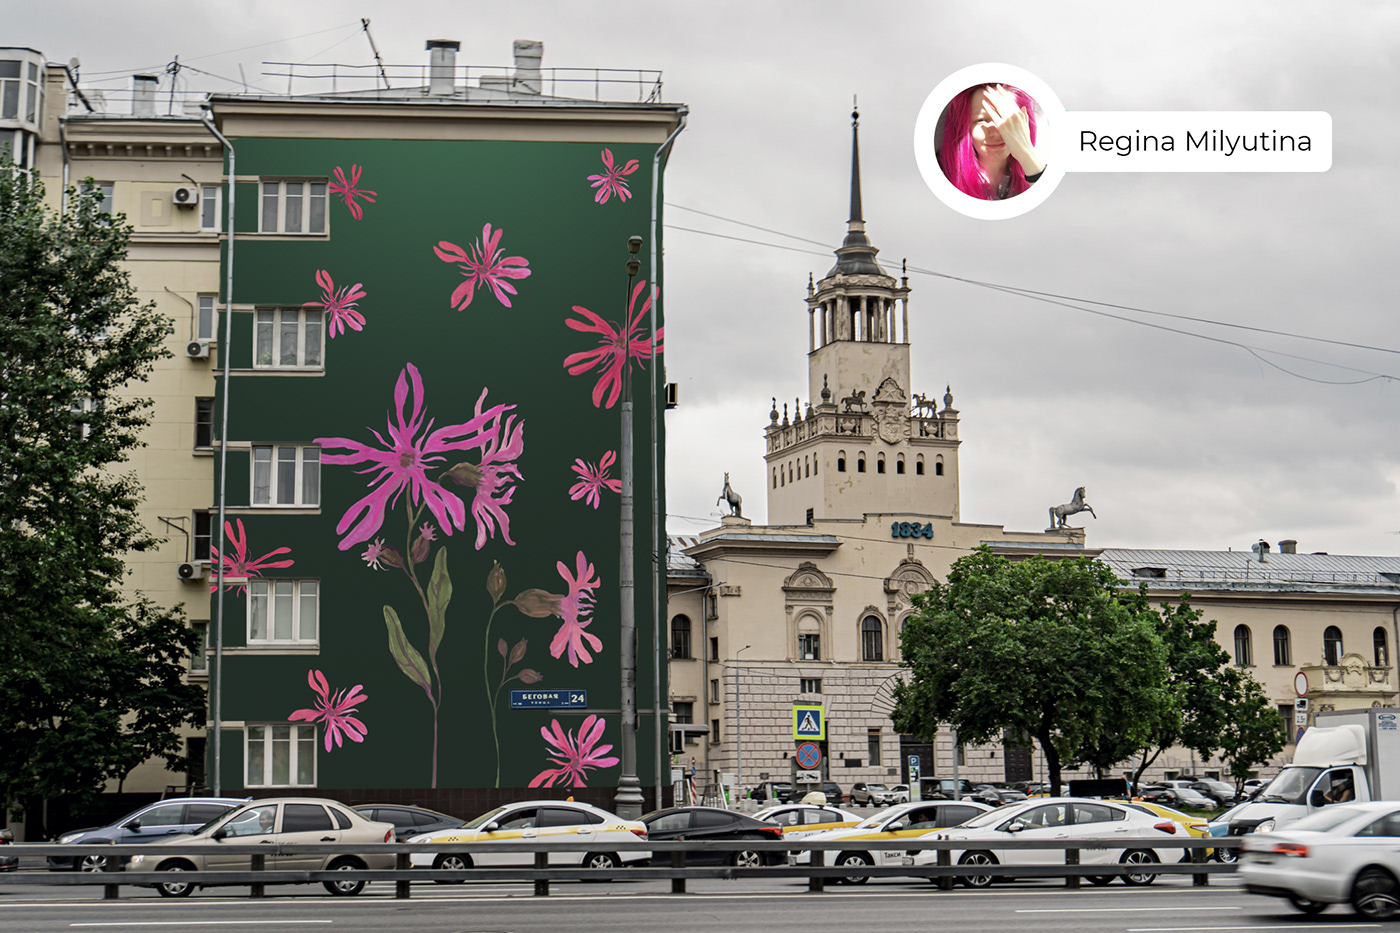 artist botanical Collaboration forest Graffiti Moscow Mural Nature pattern Street Art 